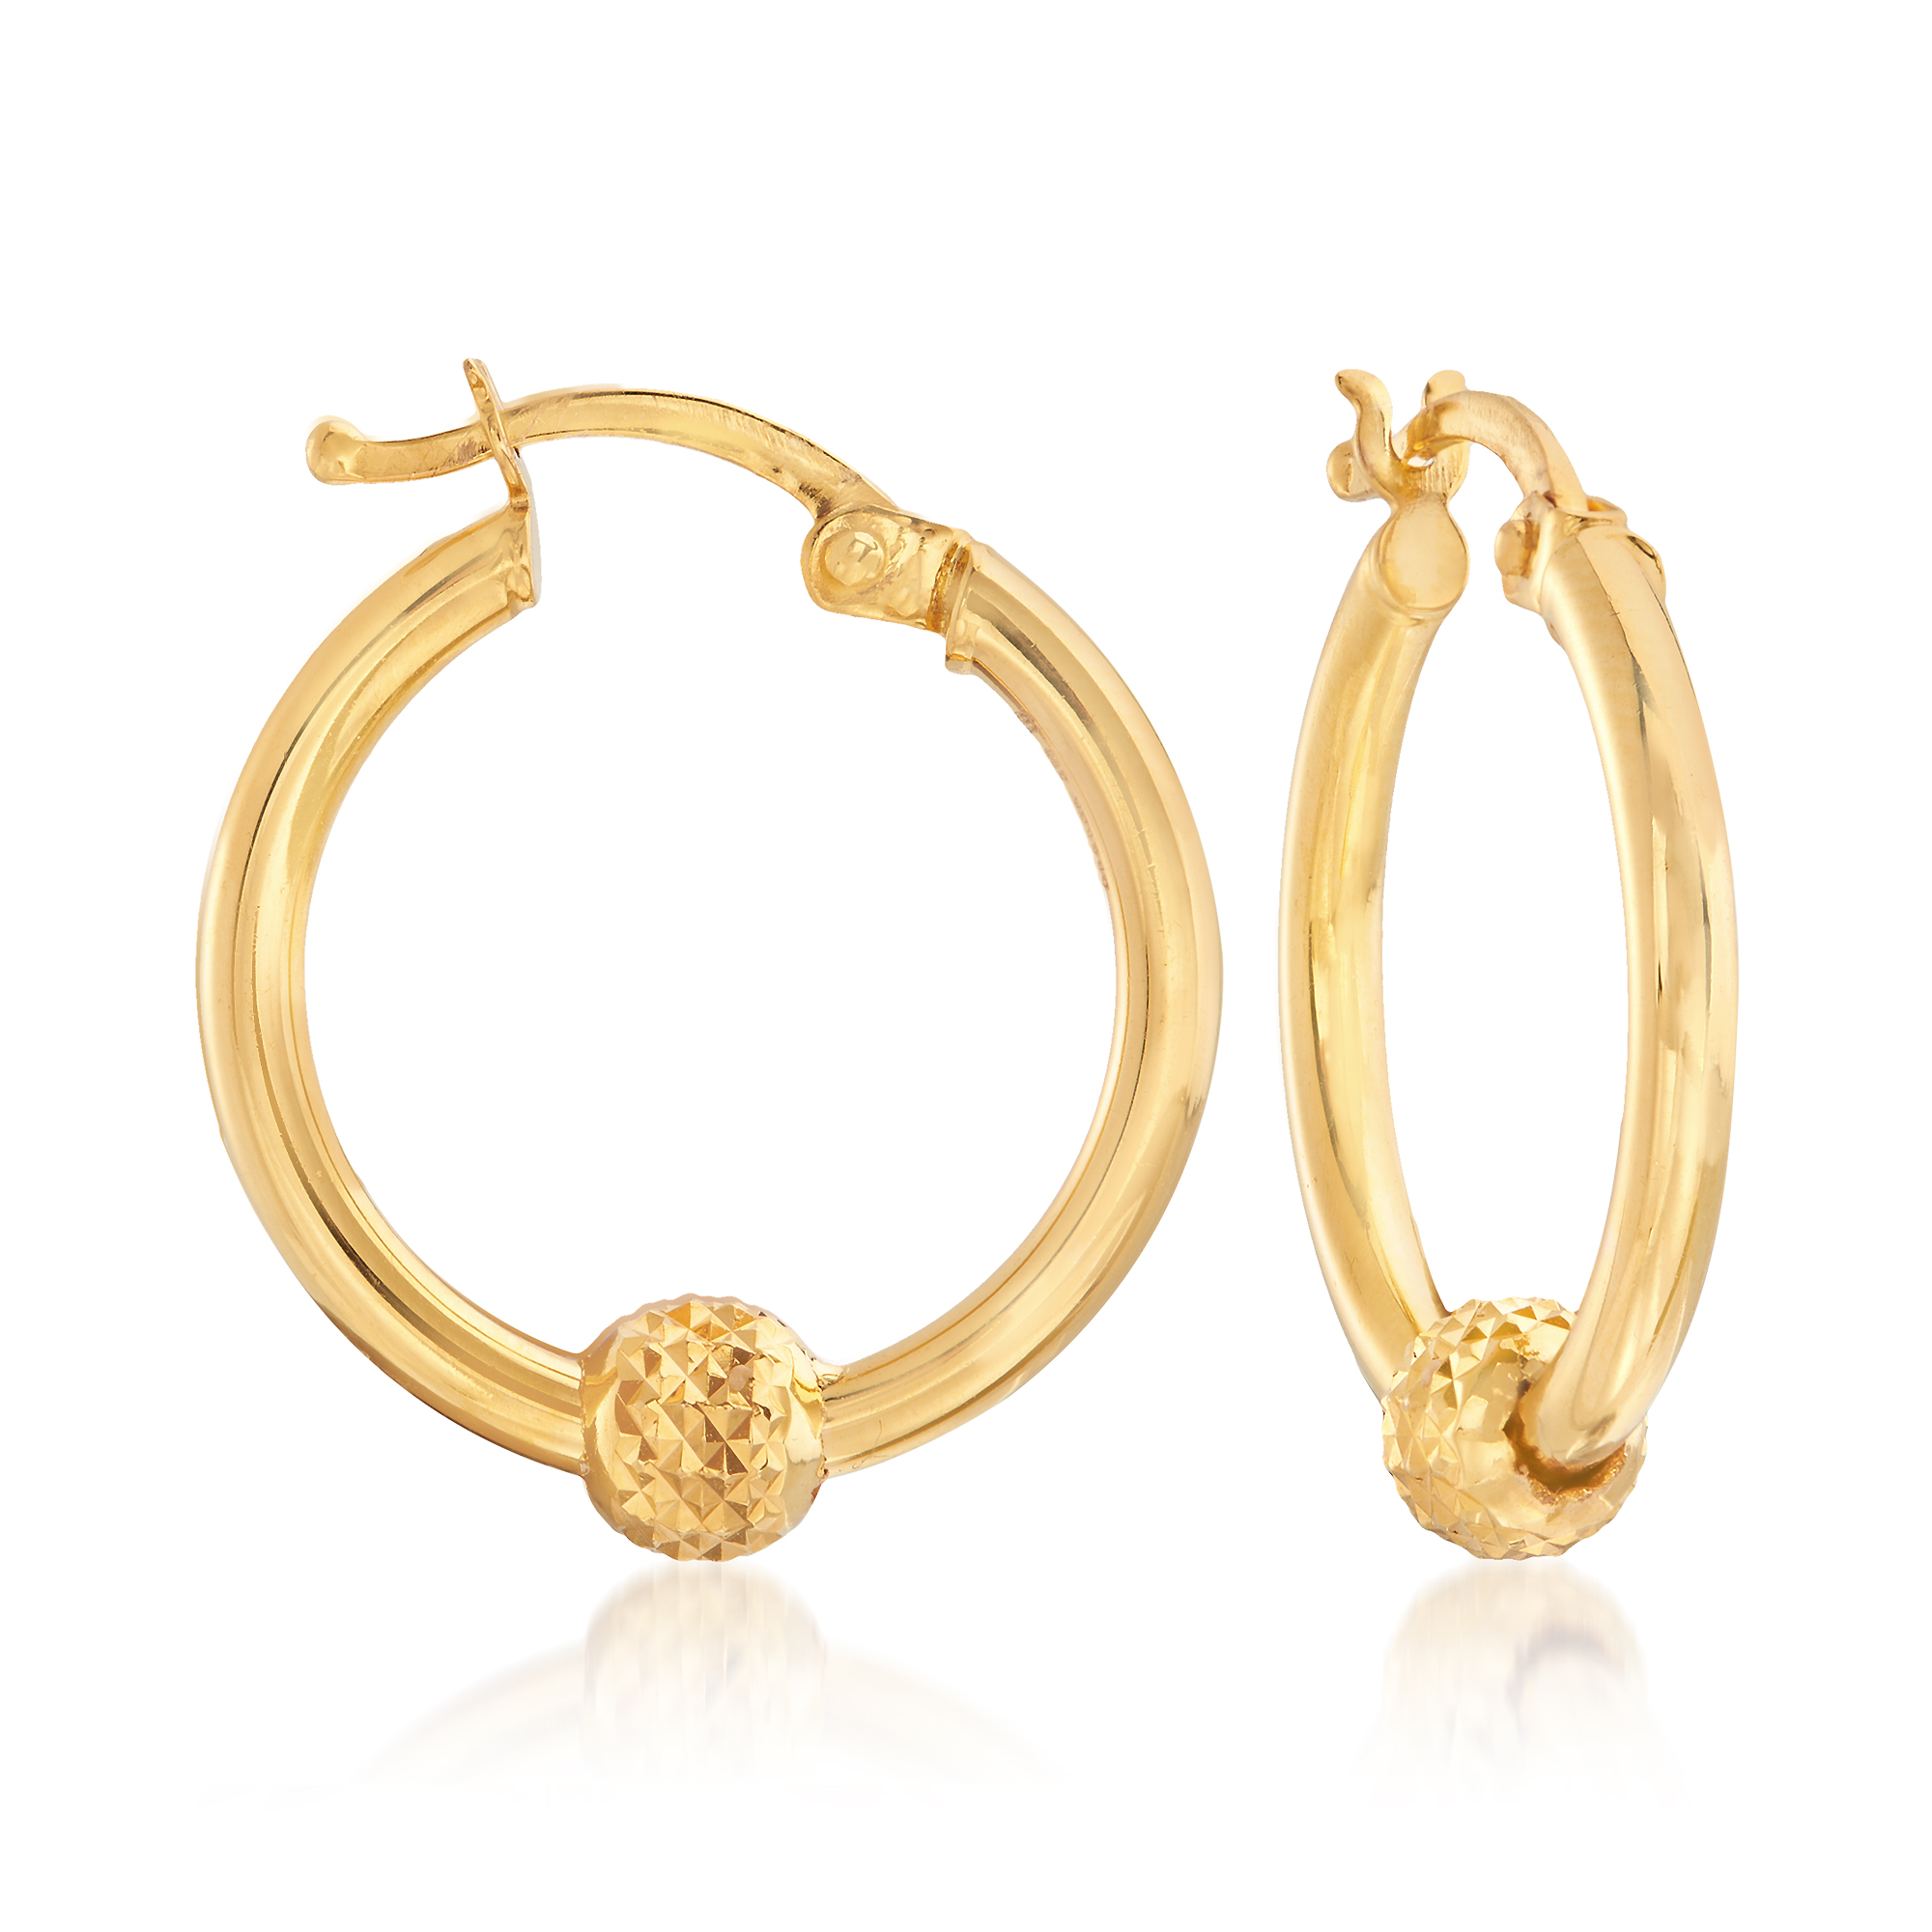 Ross-Simons 22kt Yellow Gold Hoop Earrings With Diamond-Cut Bead For Women 2.4 Grams